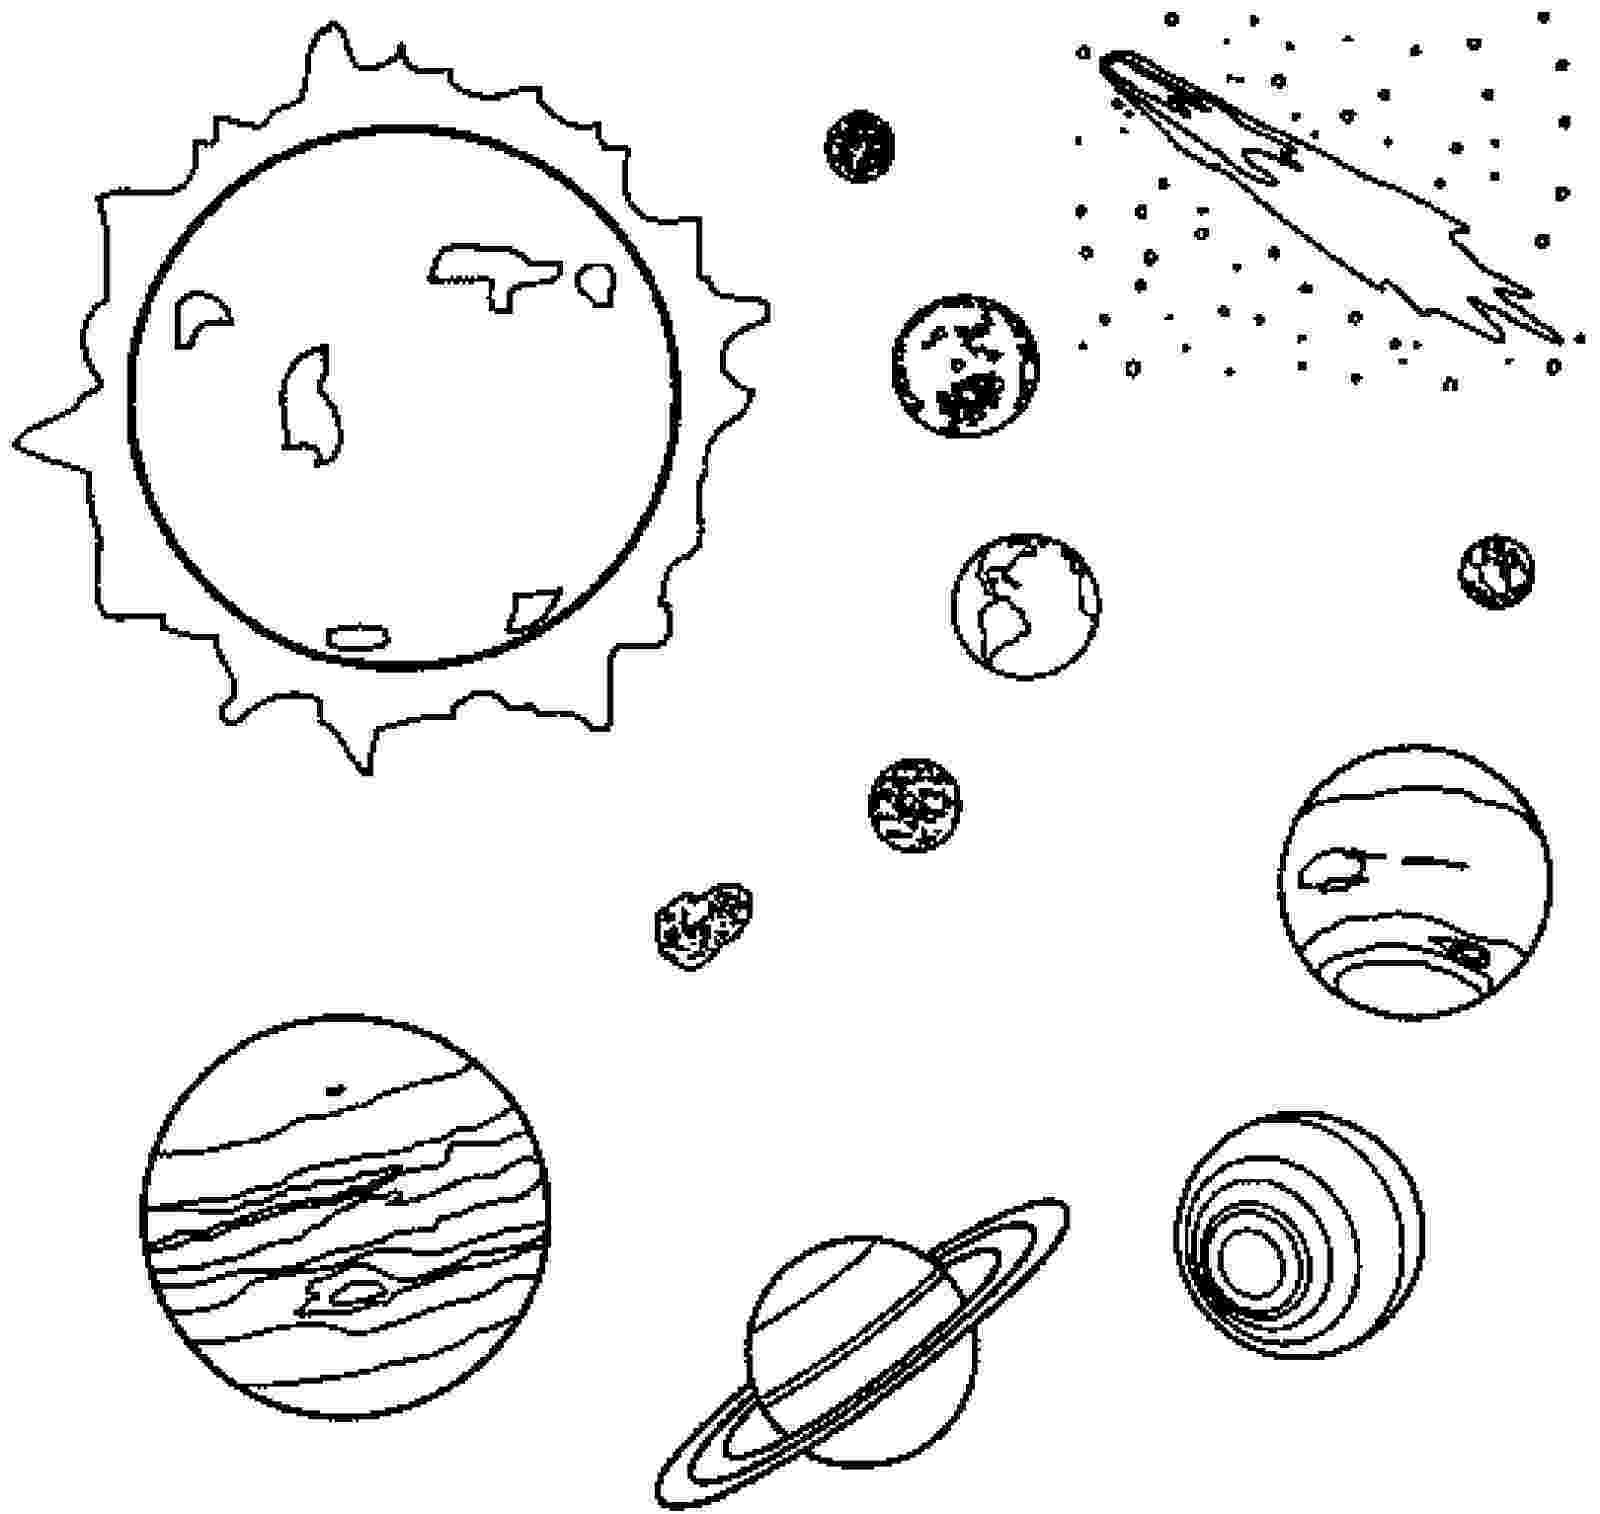 planet colouring sheets ausmalbilder für kinder malvorlagen und malbuch planet colouring planet sheets 